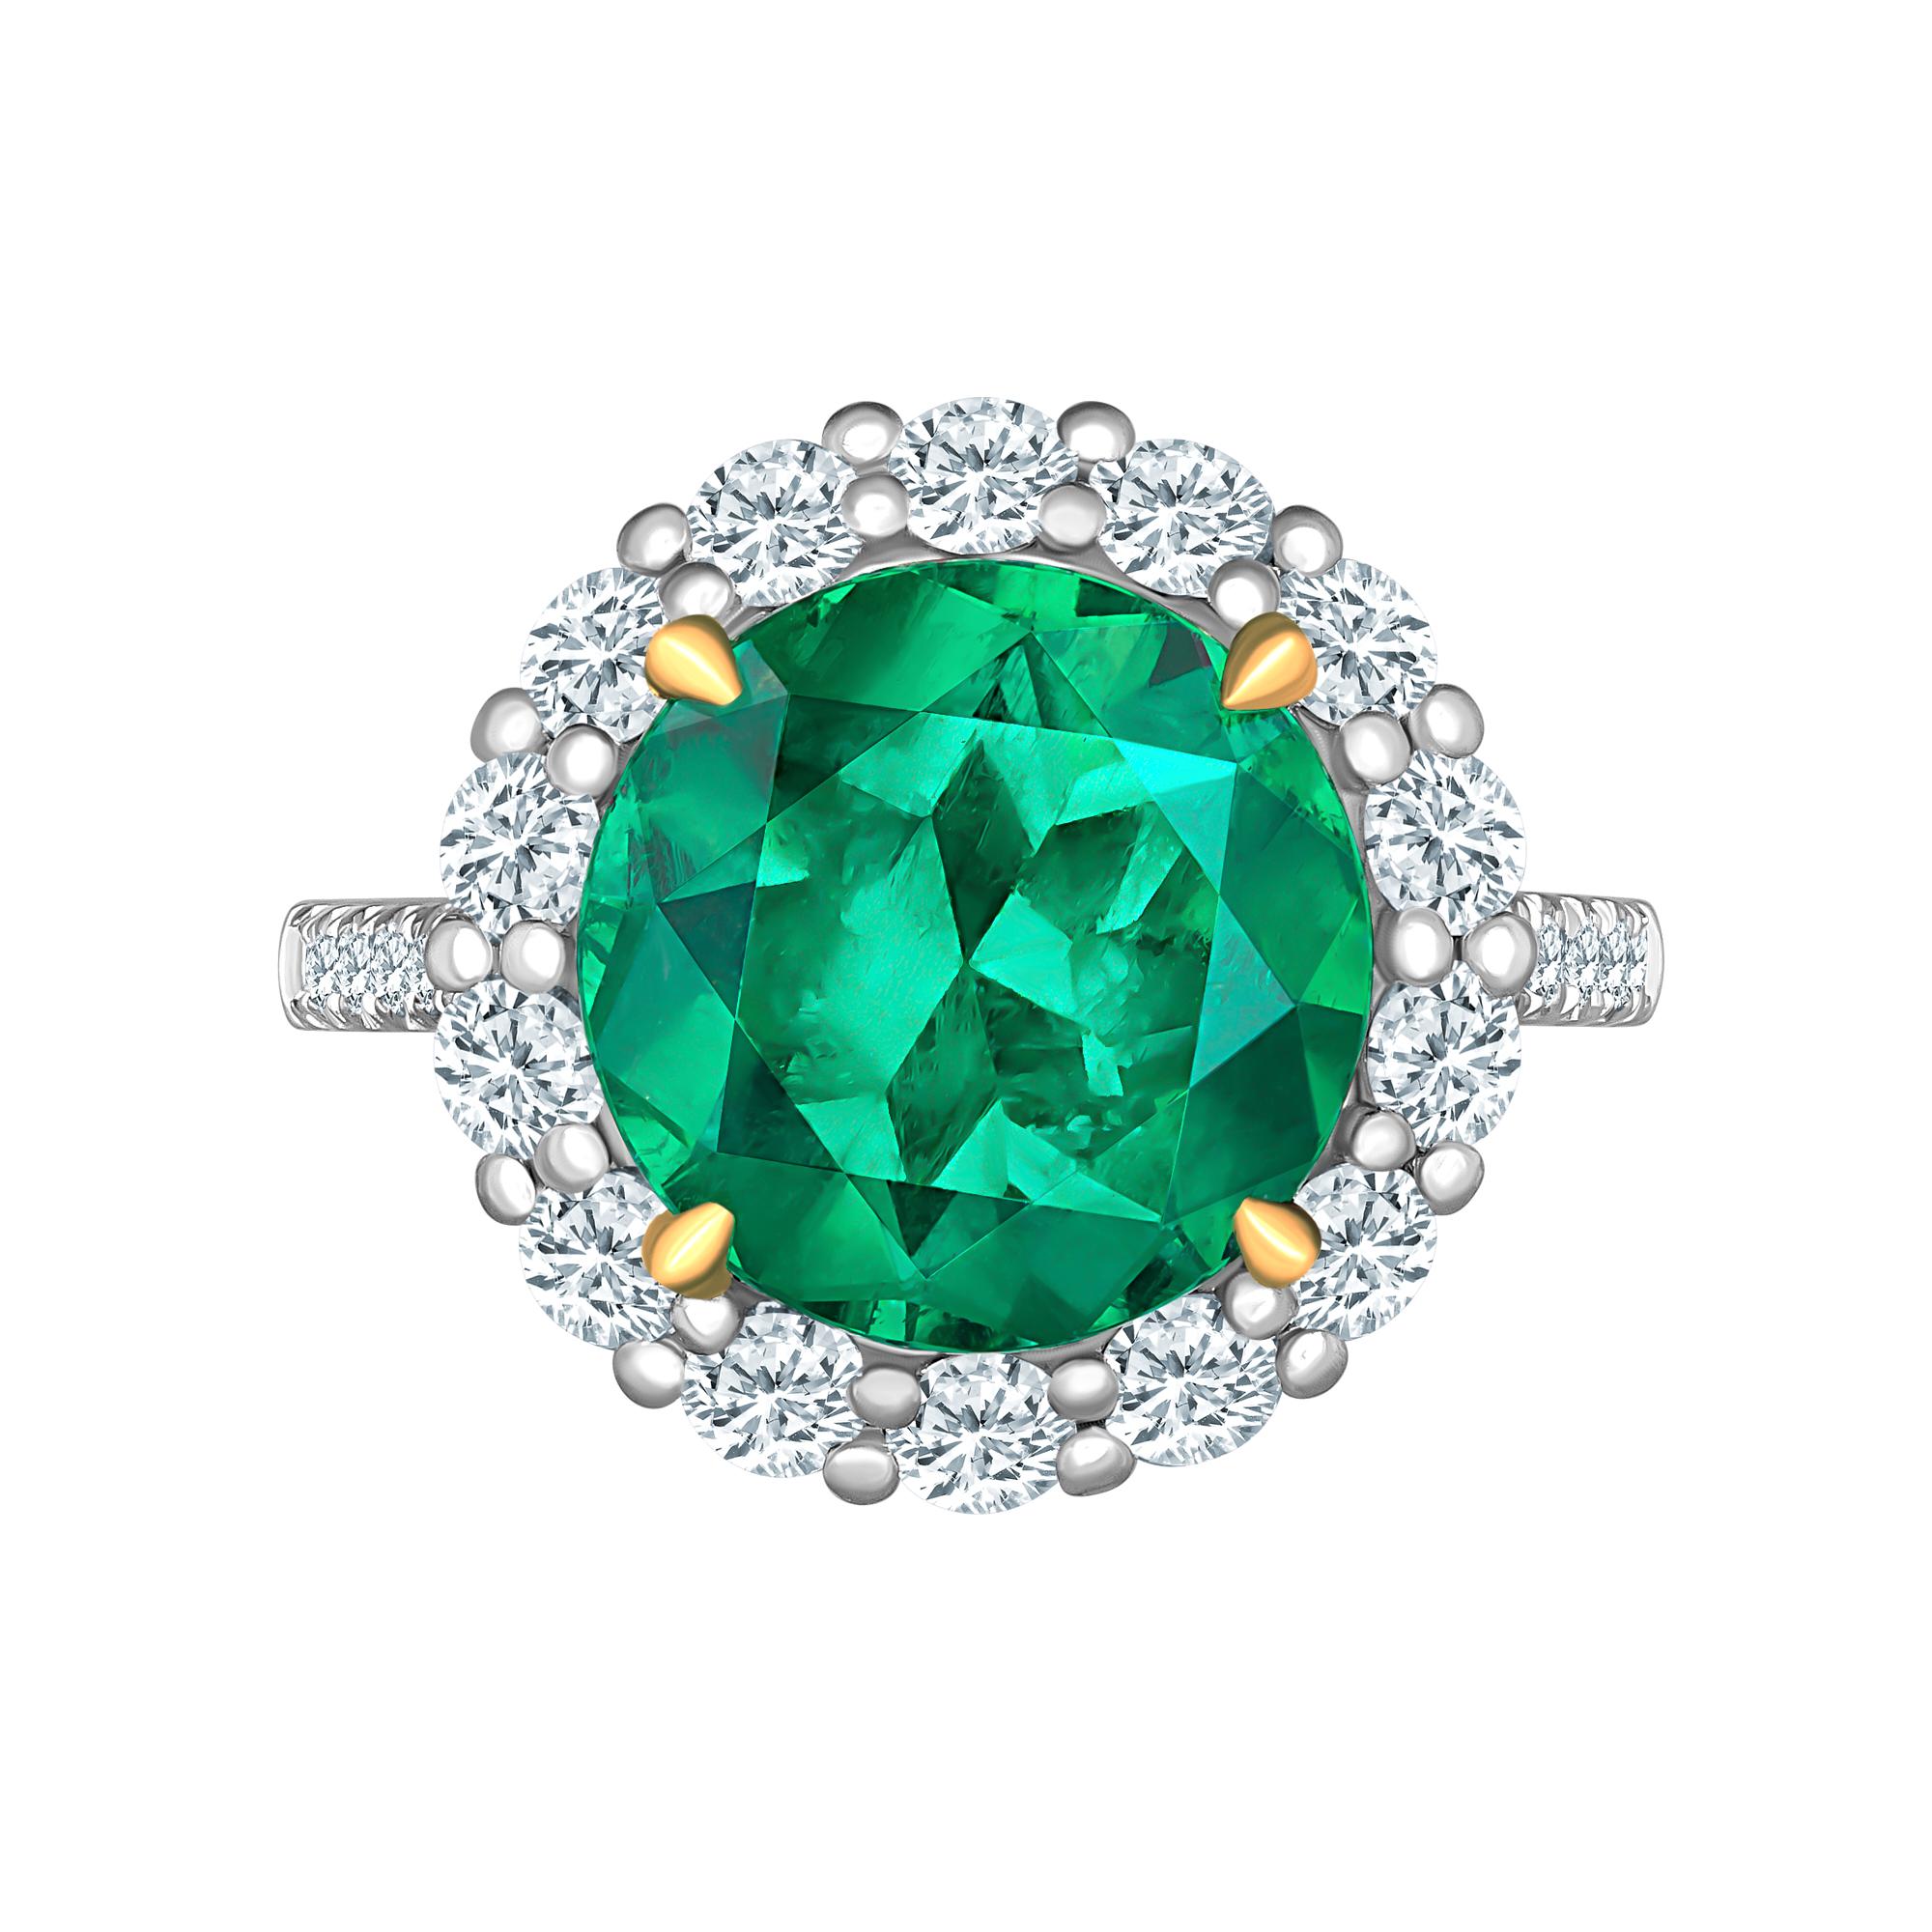 Emilio Jewelry 6.43 Carat Certified Colombian Emerald Diamond Ring